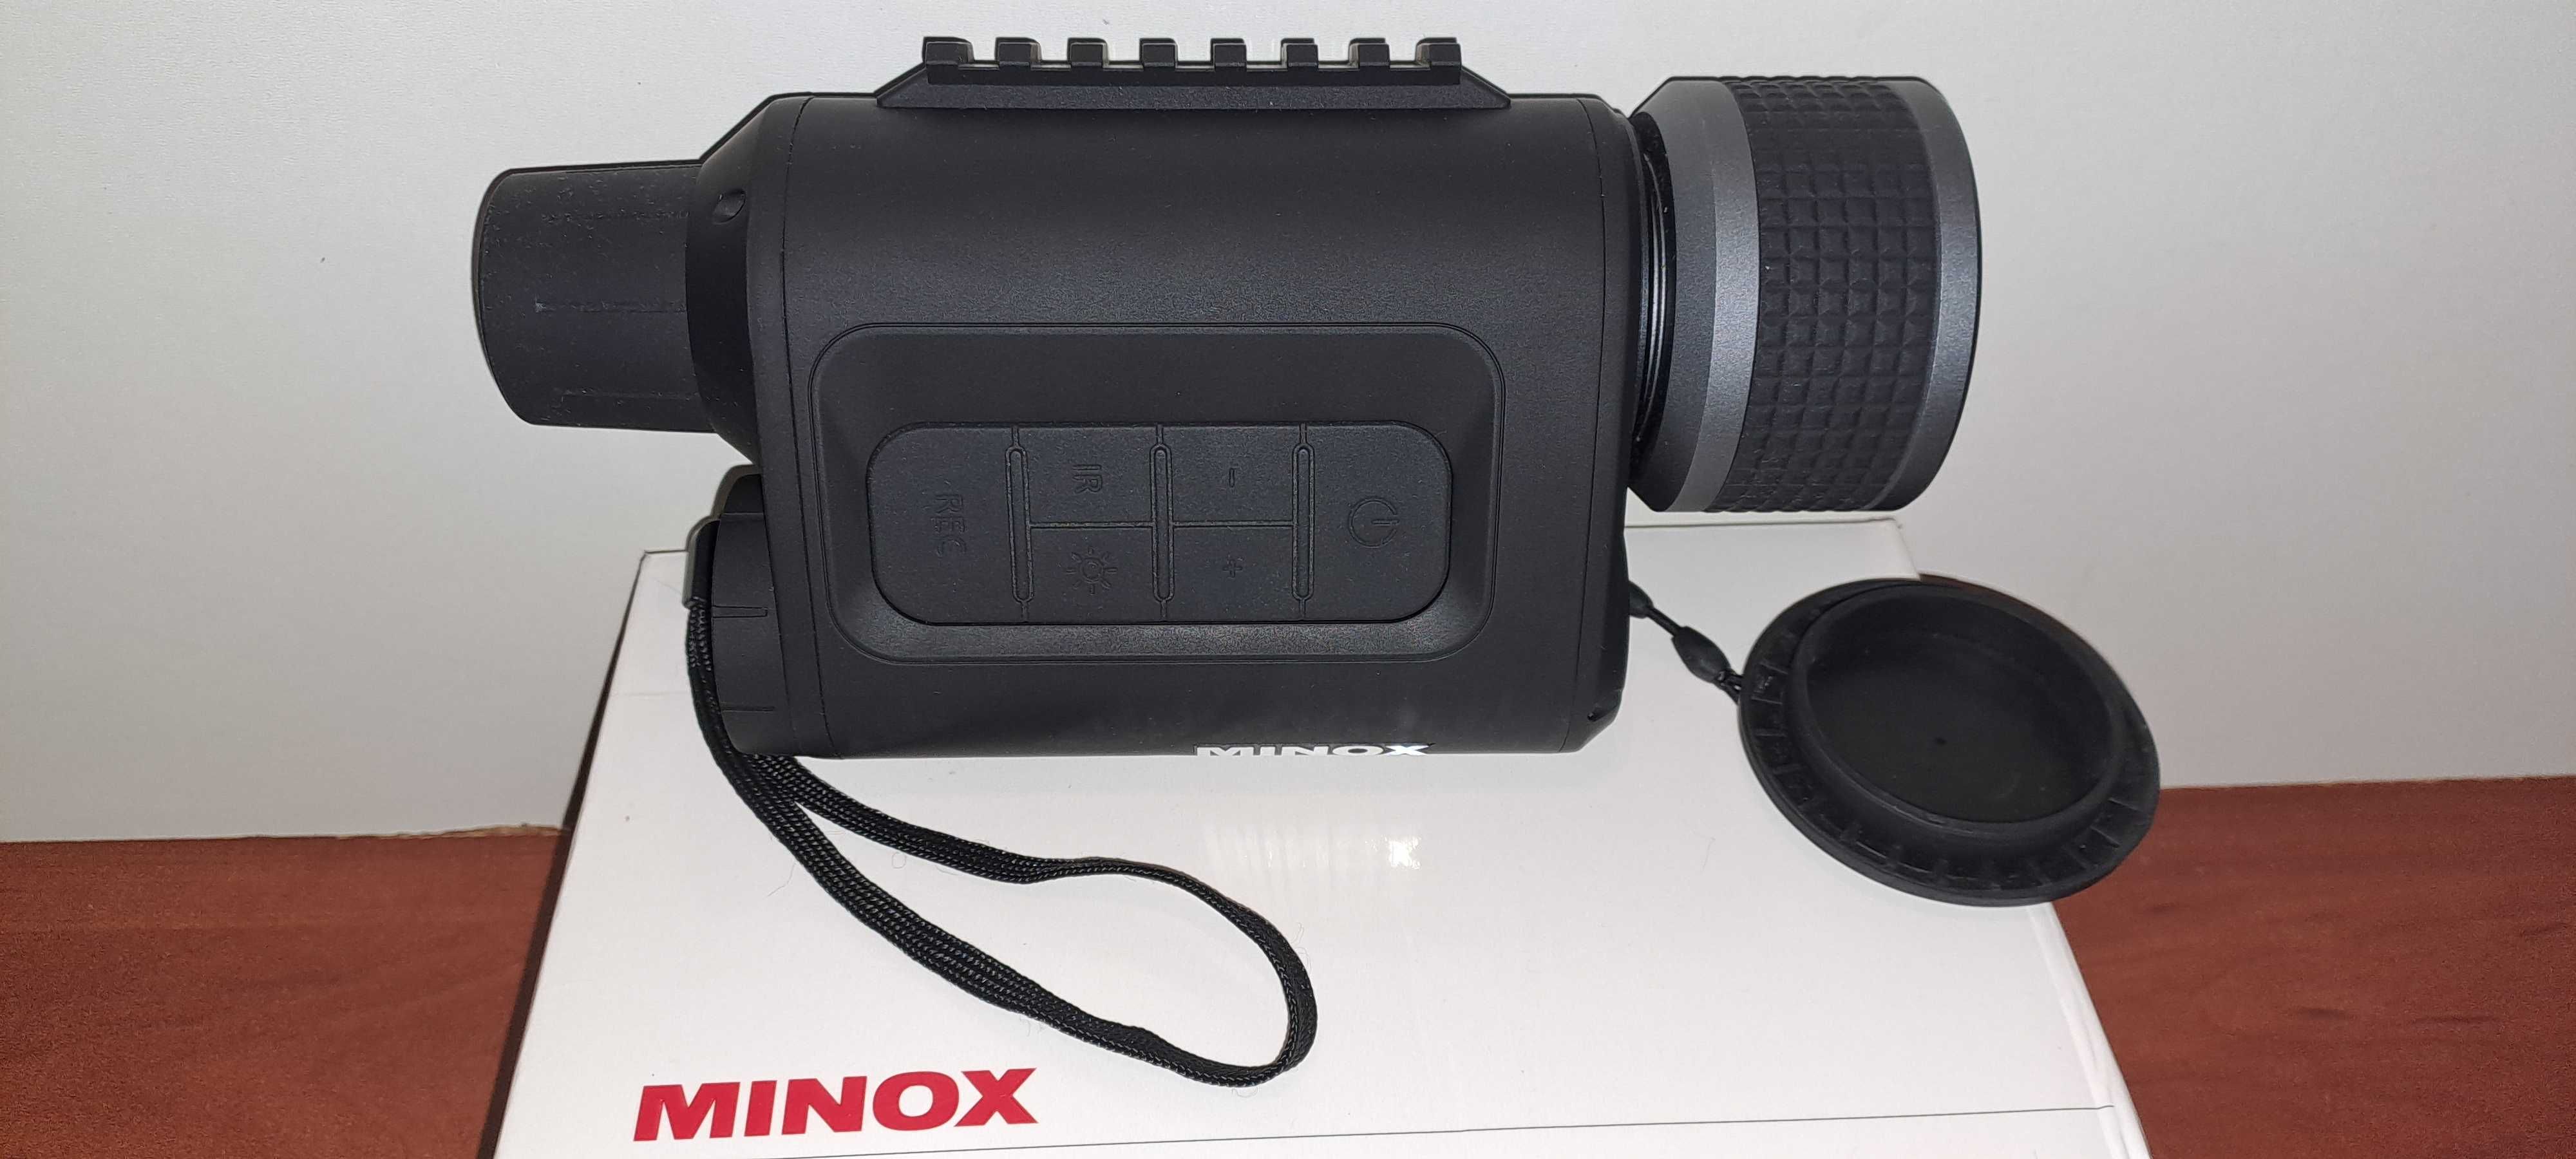 Night vision Minox NV 350 nou, made in Germany